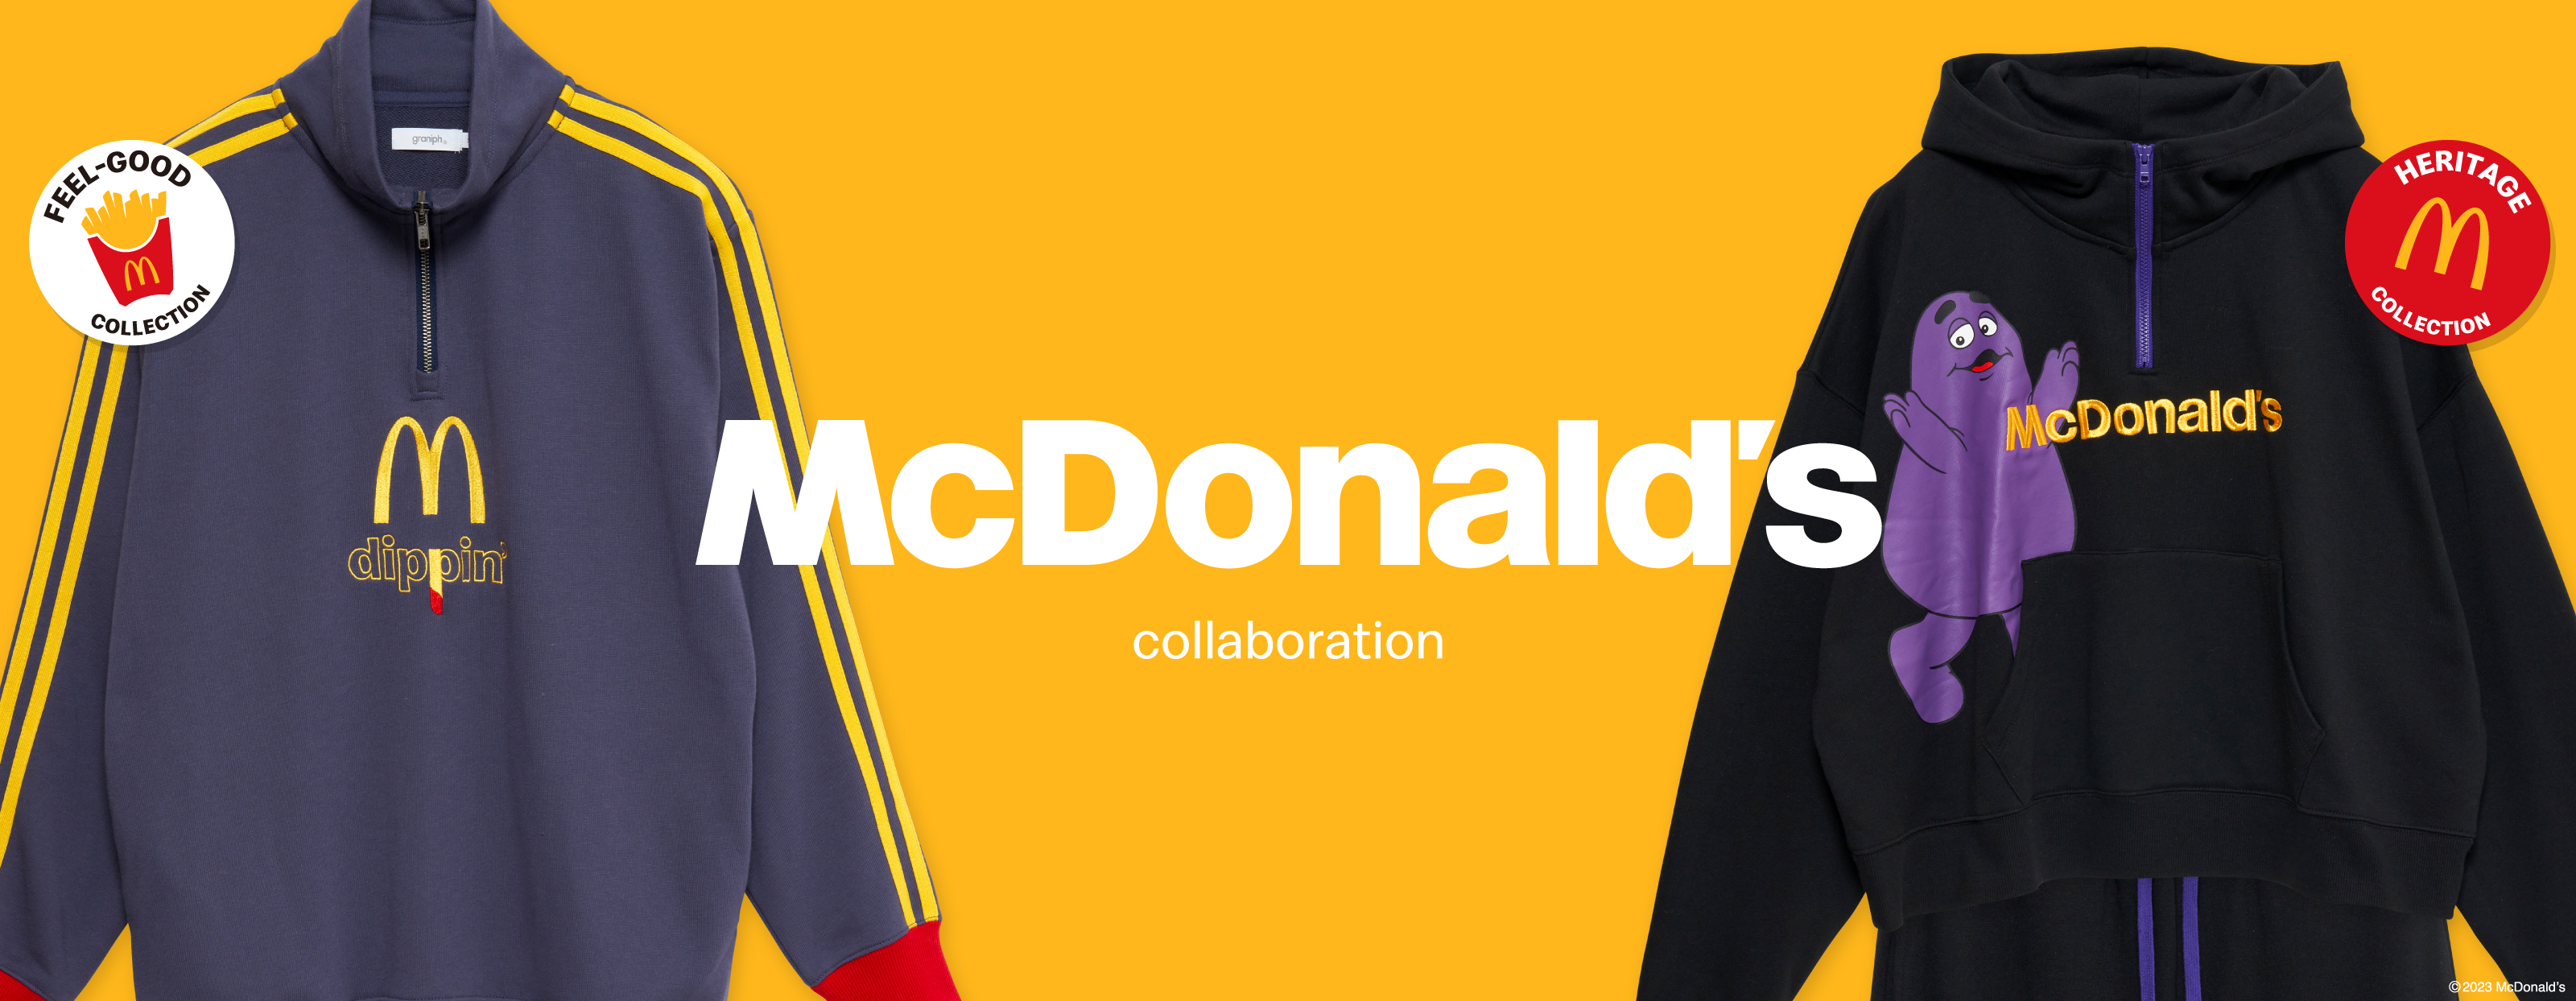 McDonald's collaboration